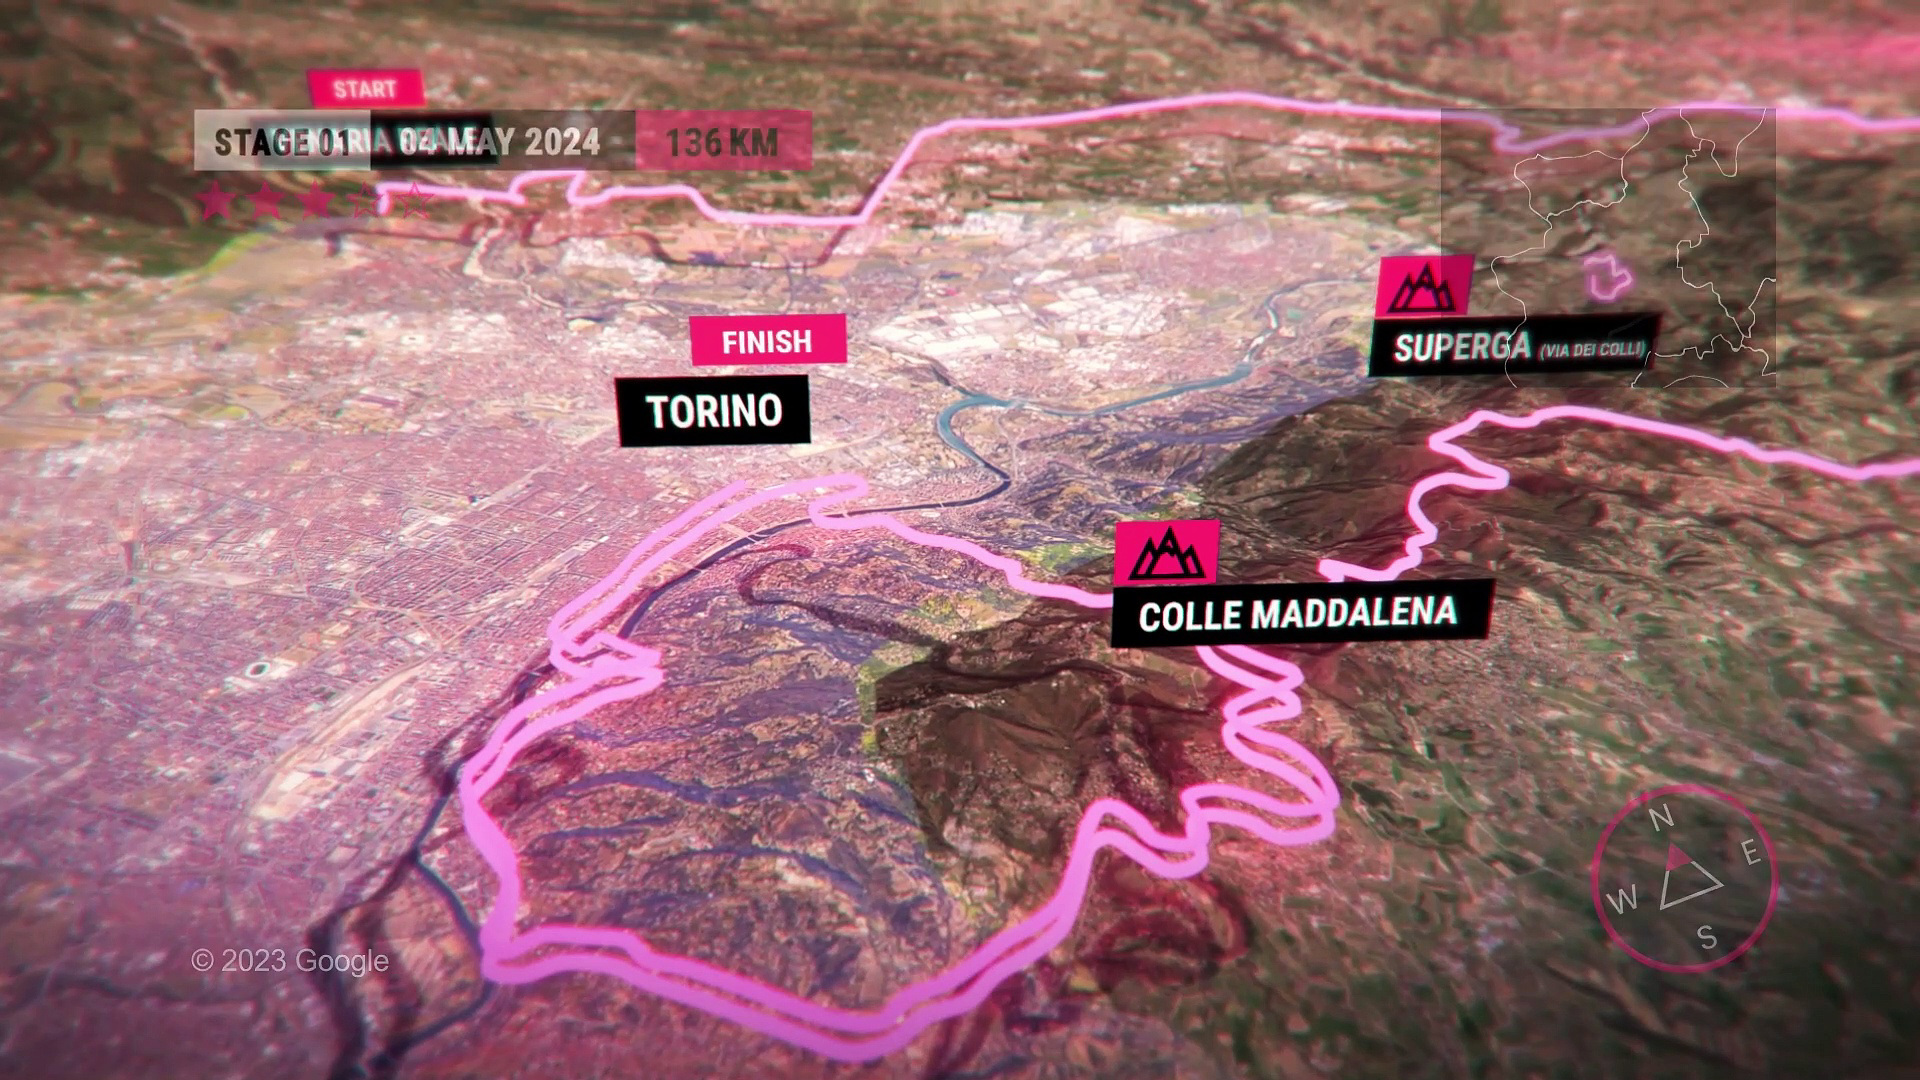 Giro d'Italia 2024 Grande Partenza Regione Piemonte